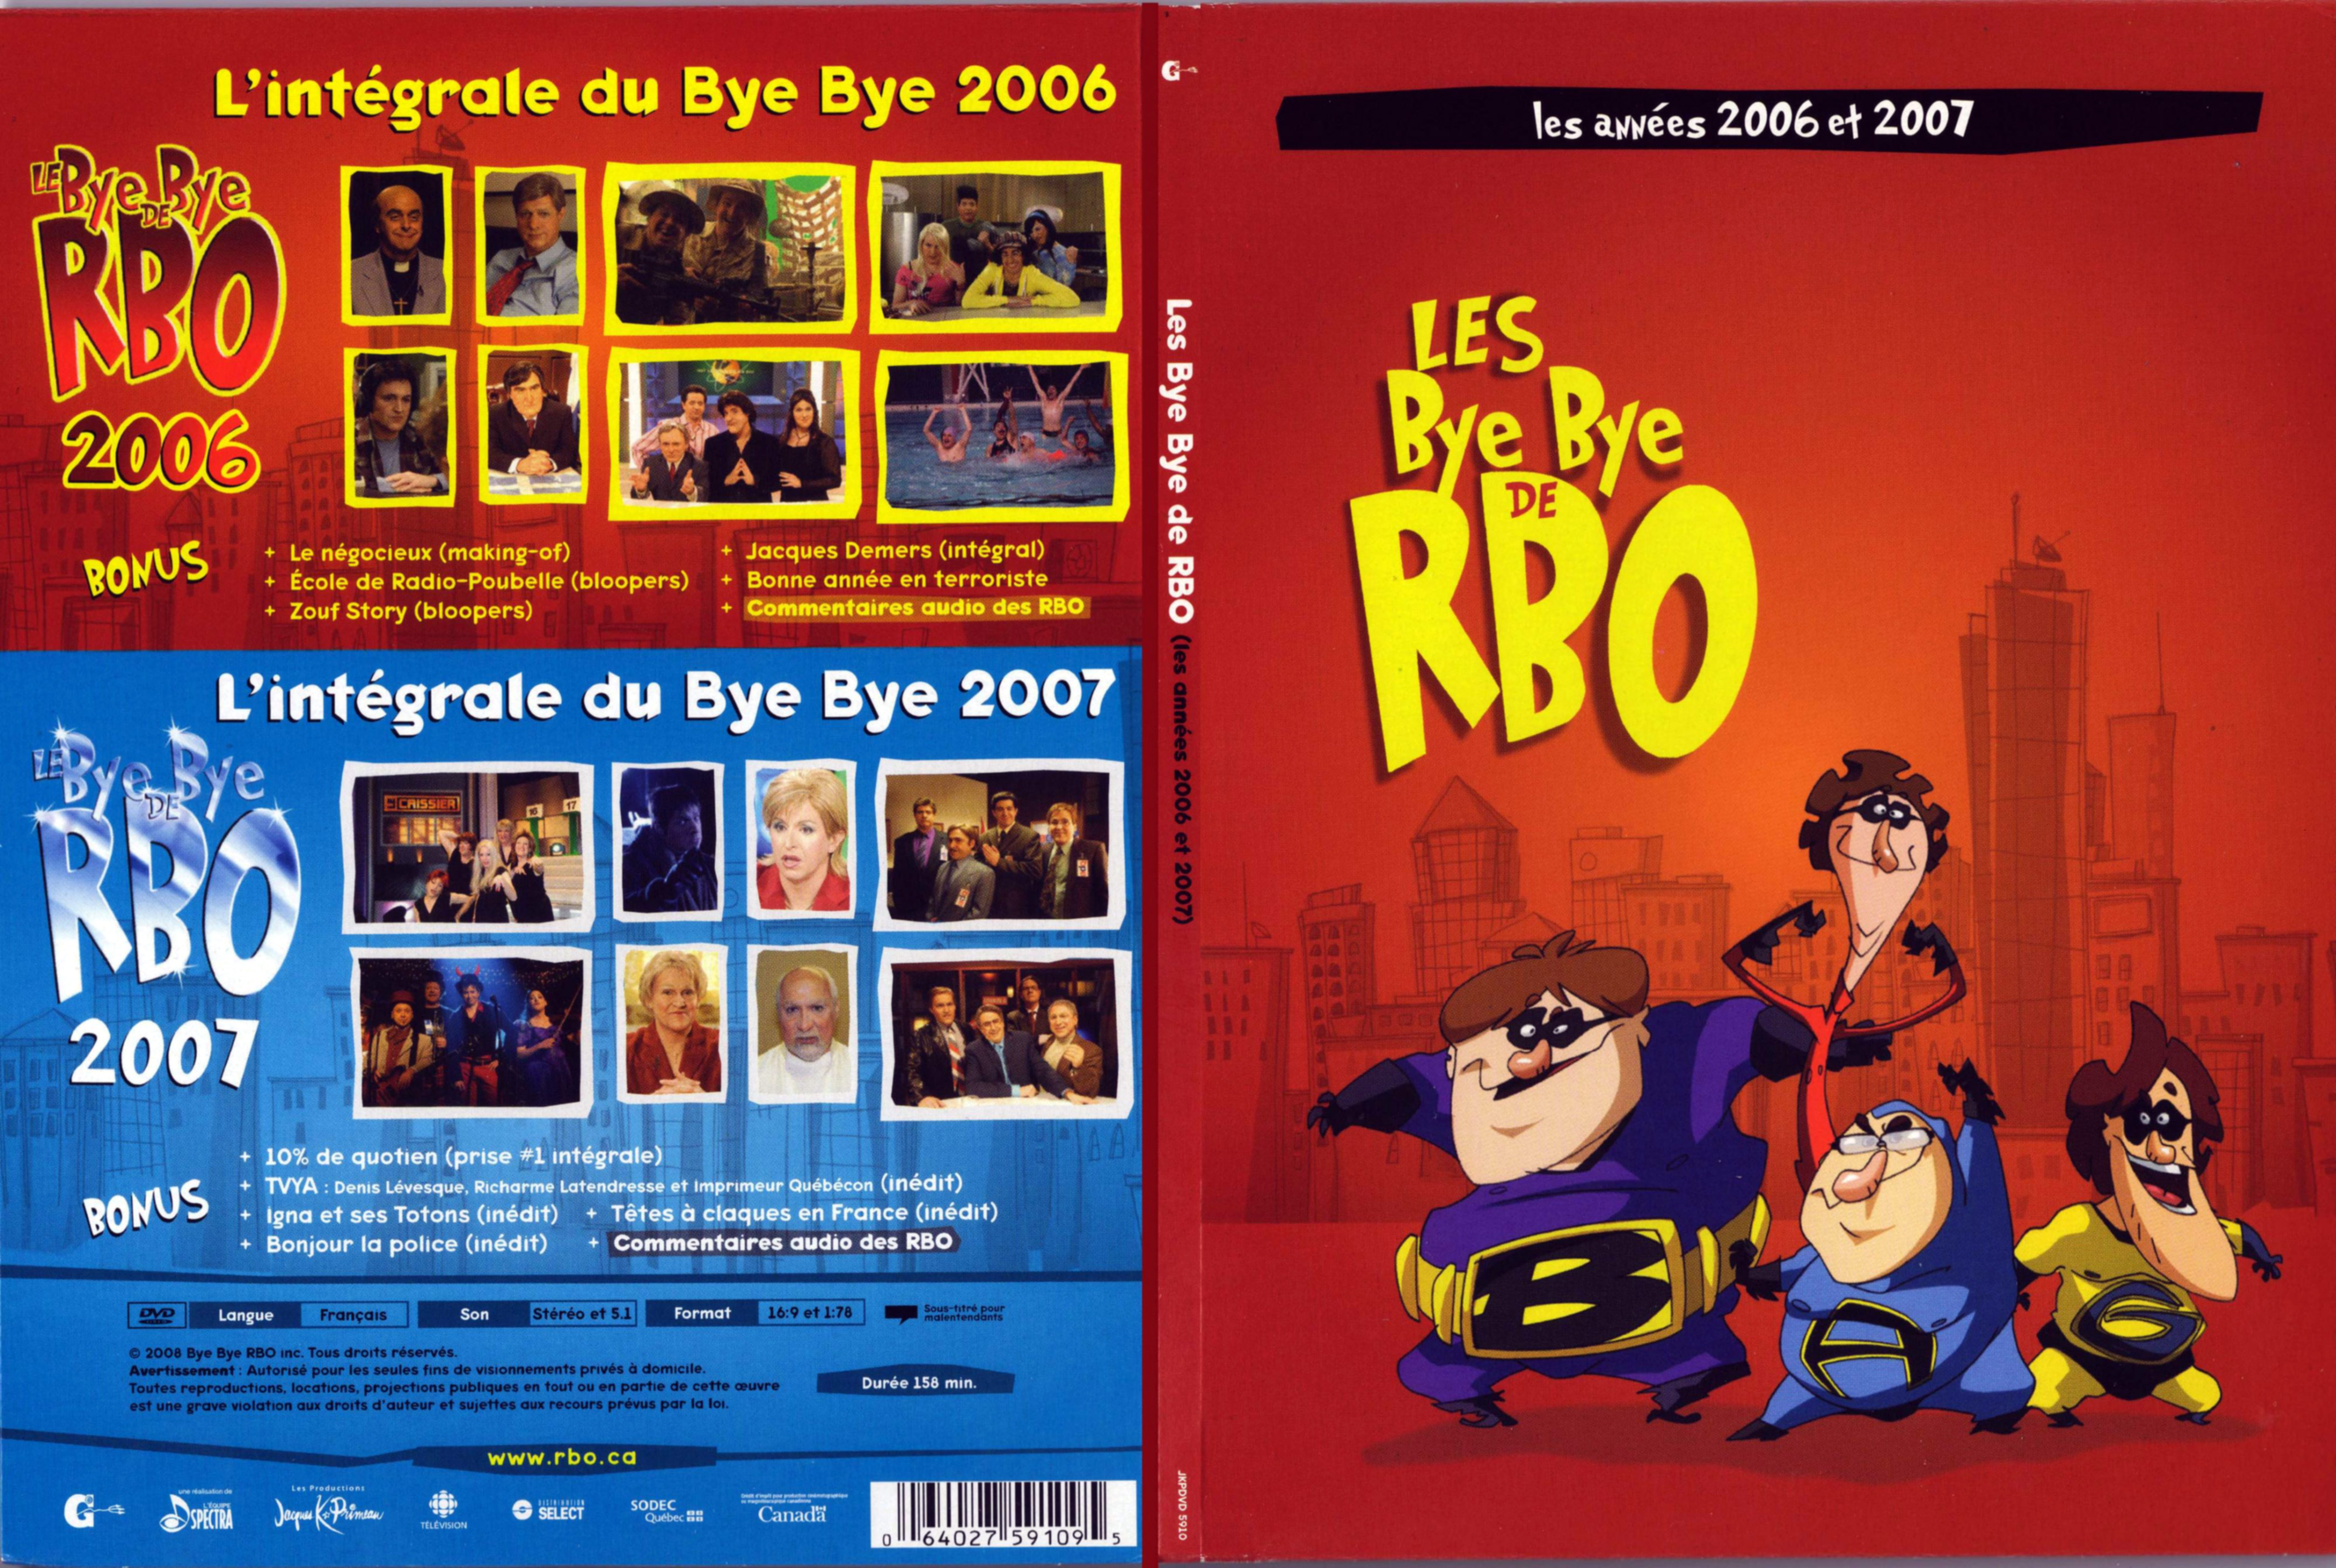 Jaquette DVD Les Bye Bye de RBO